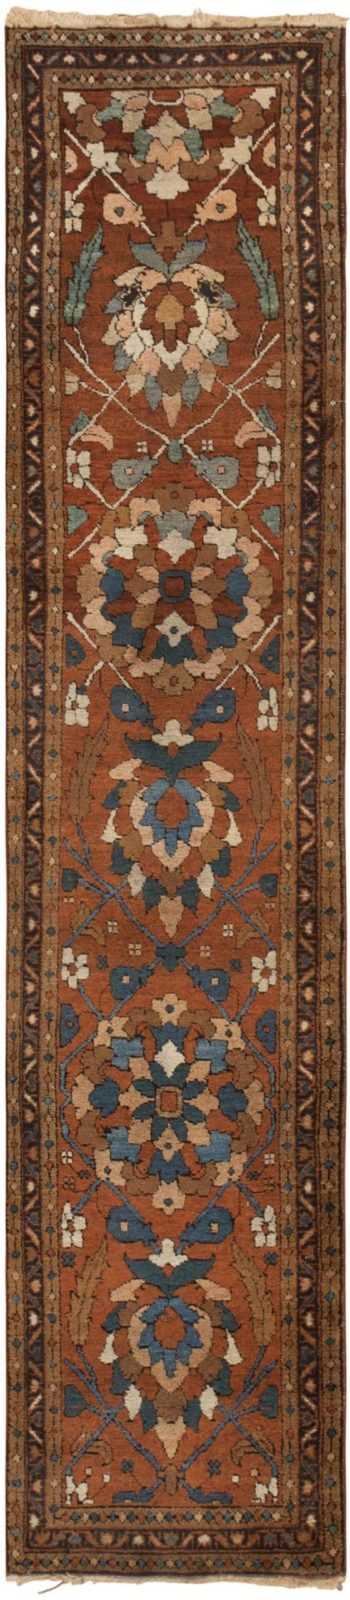 Antique Persian Heriz Rug Runner 46173 Nazmiyal Antique Rugs